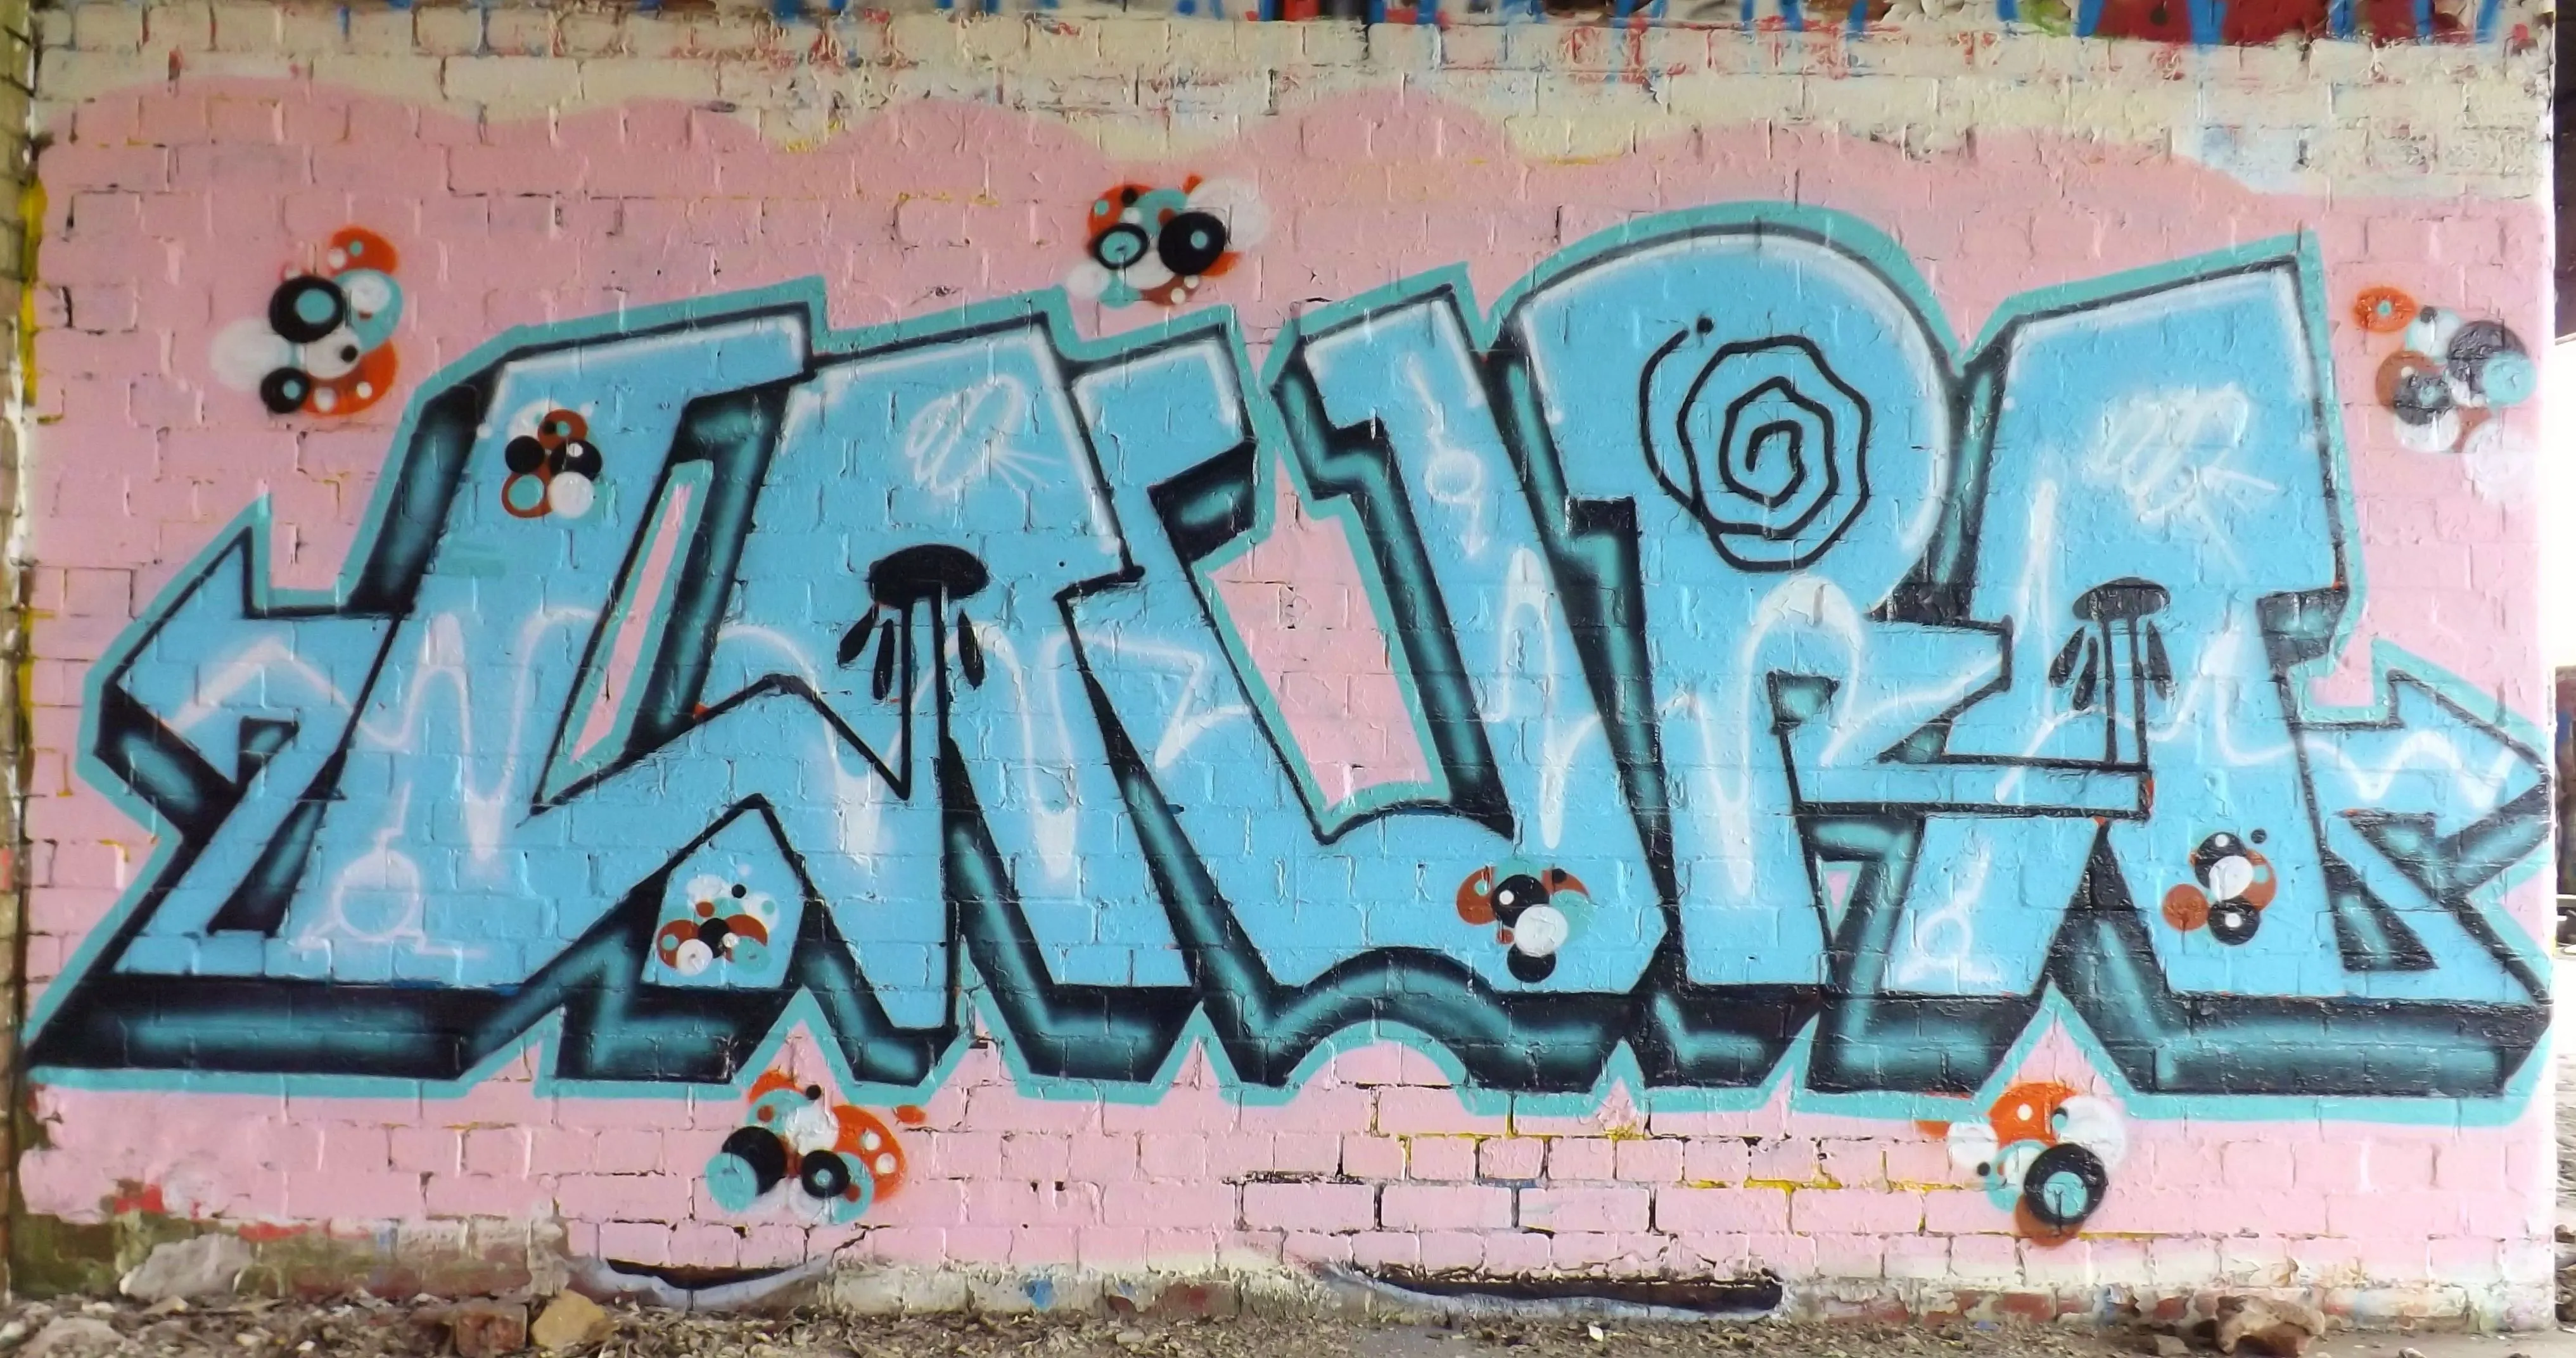 Dank | fiona ferret graffiti - The Writing on the Wall